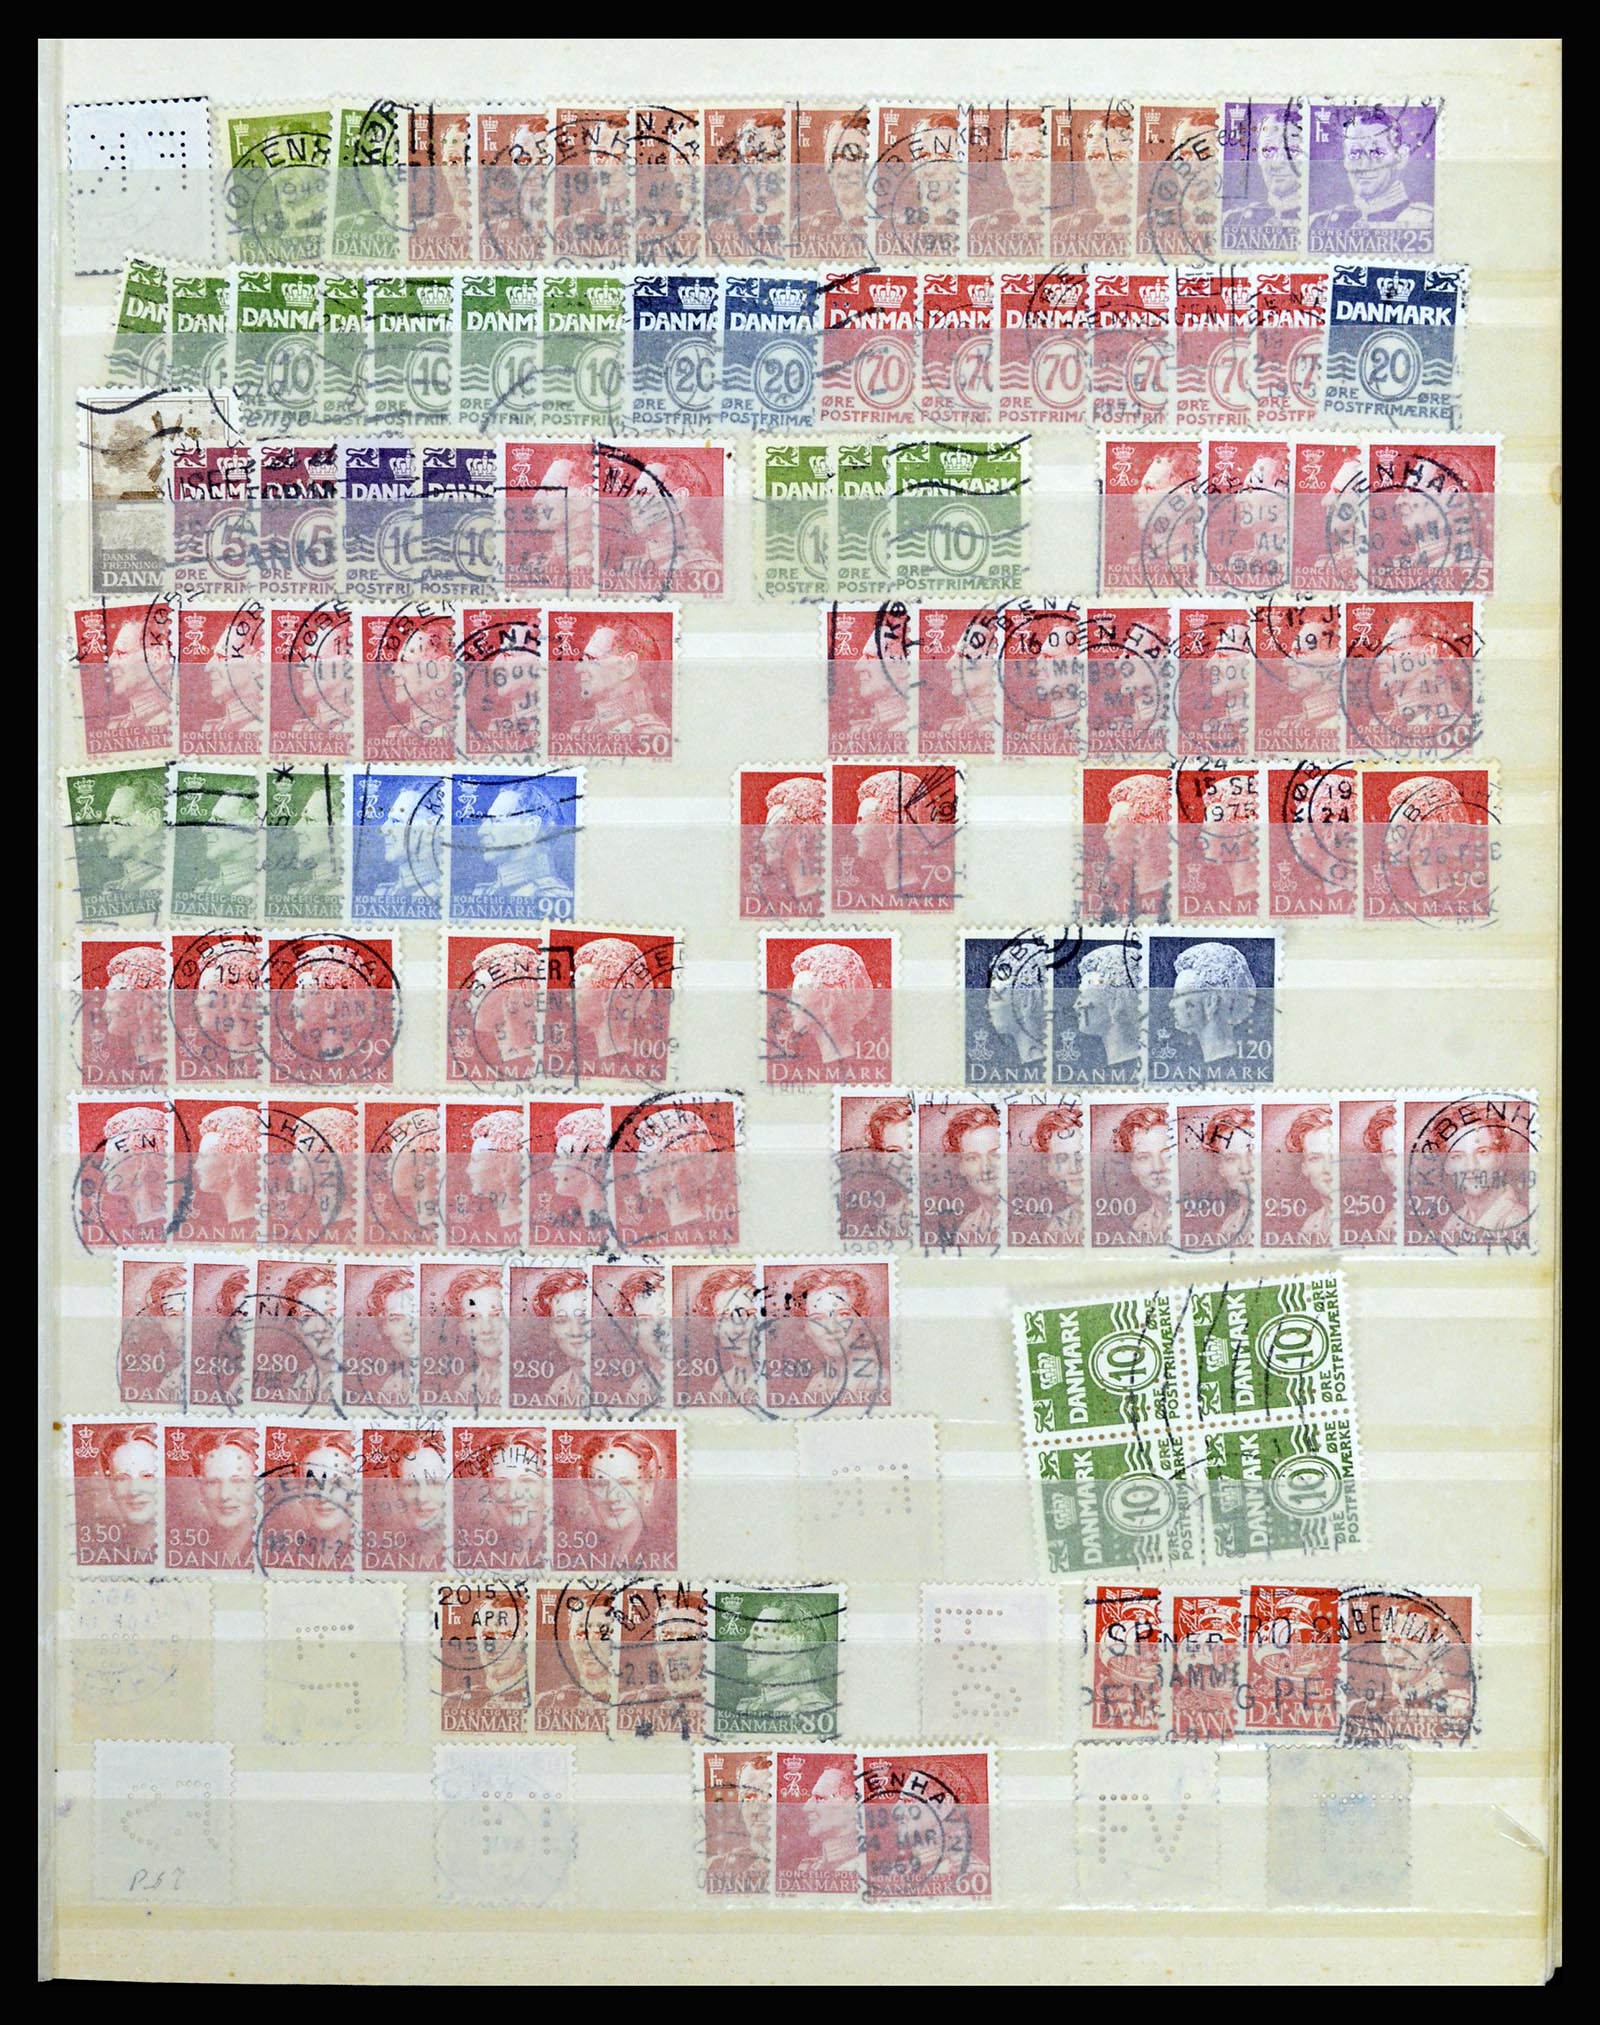 37056 073 - Stamp collection 37056 Denmark perfins.